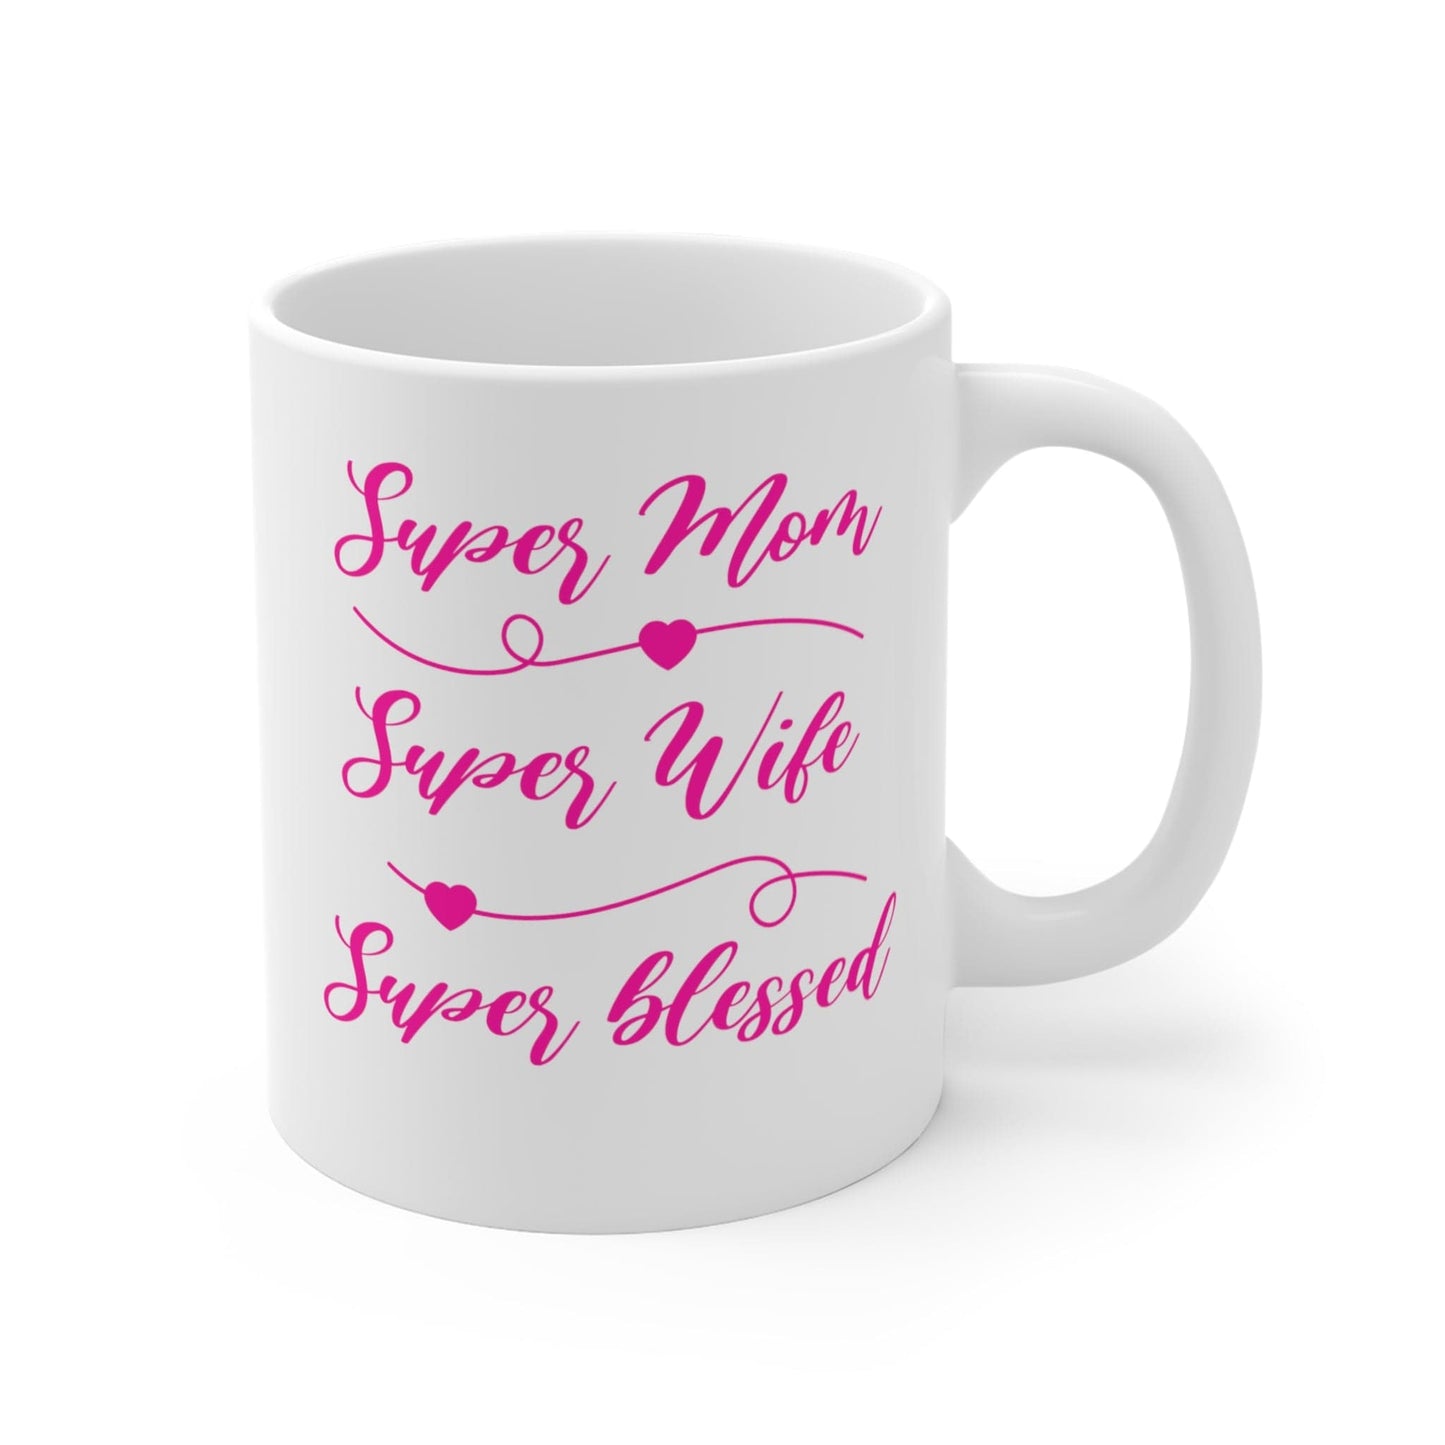 Super Mom Super Wife Super Blessed Ceramic Mug 11oz